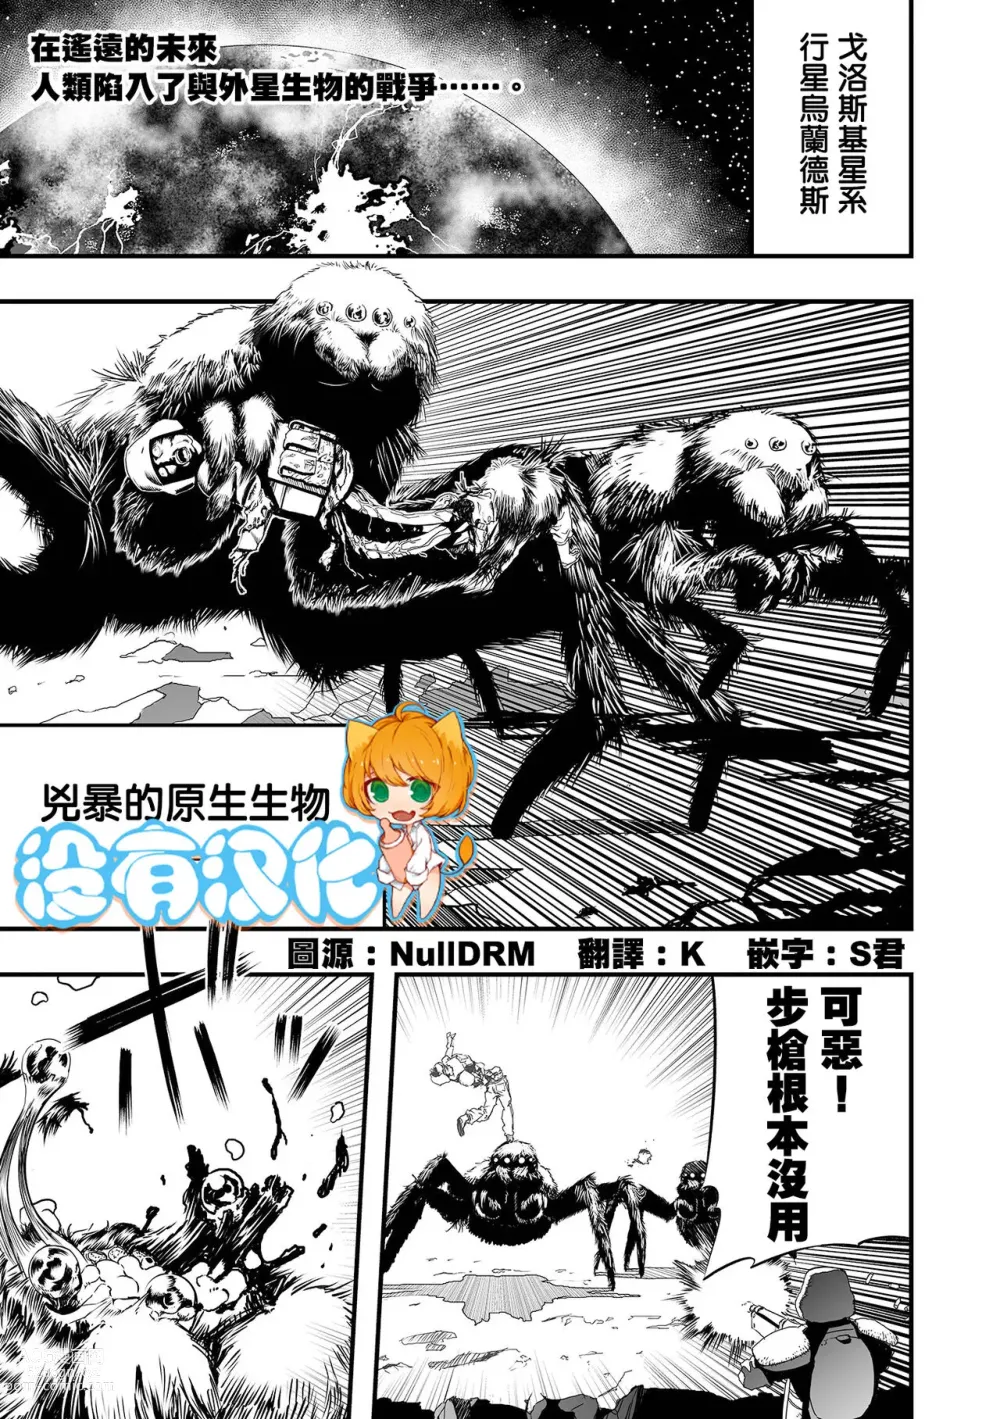 Page 1 of manga 防彈帶士兵團